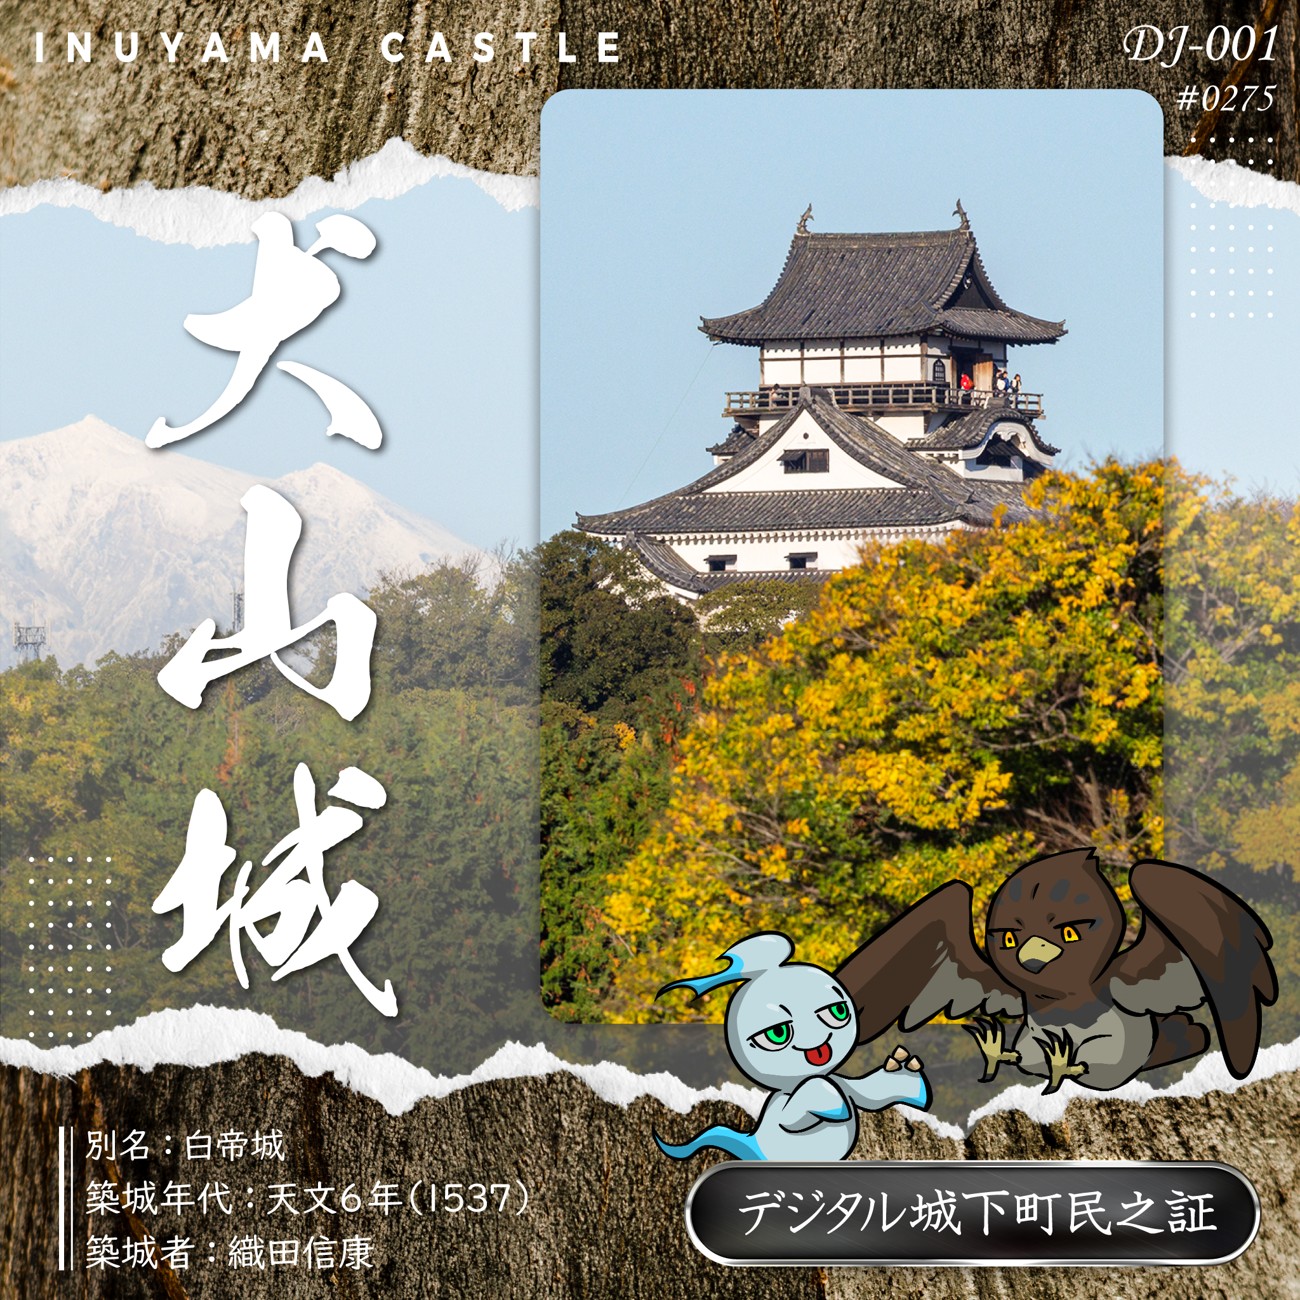 Inuyama Castle #0275